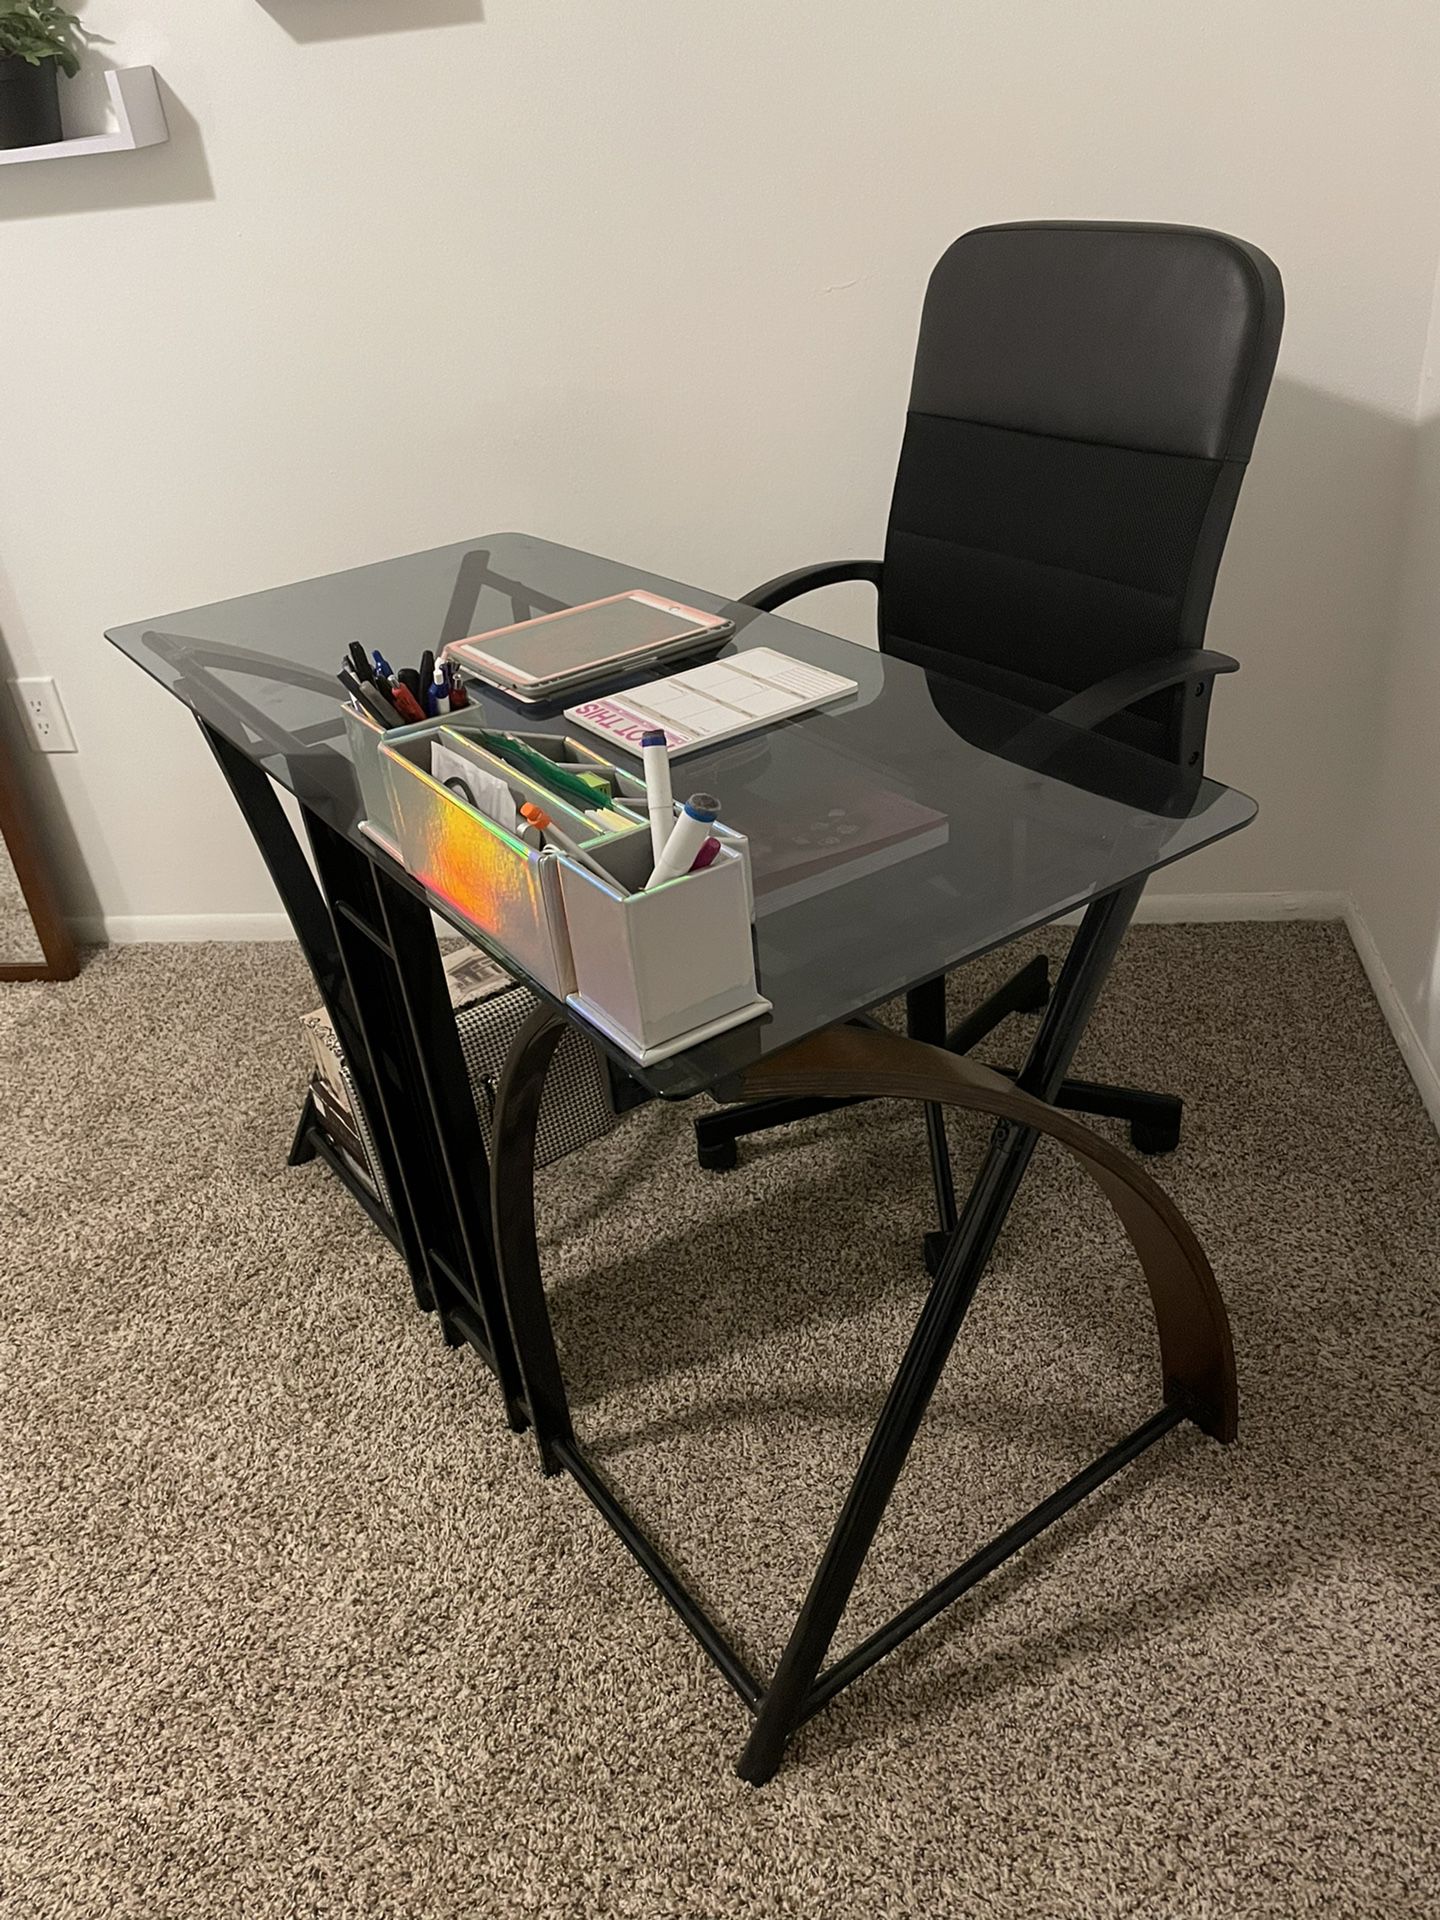 Desk & Chair $120